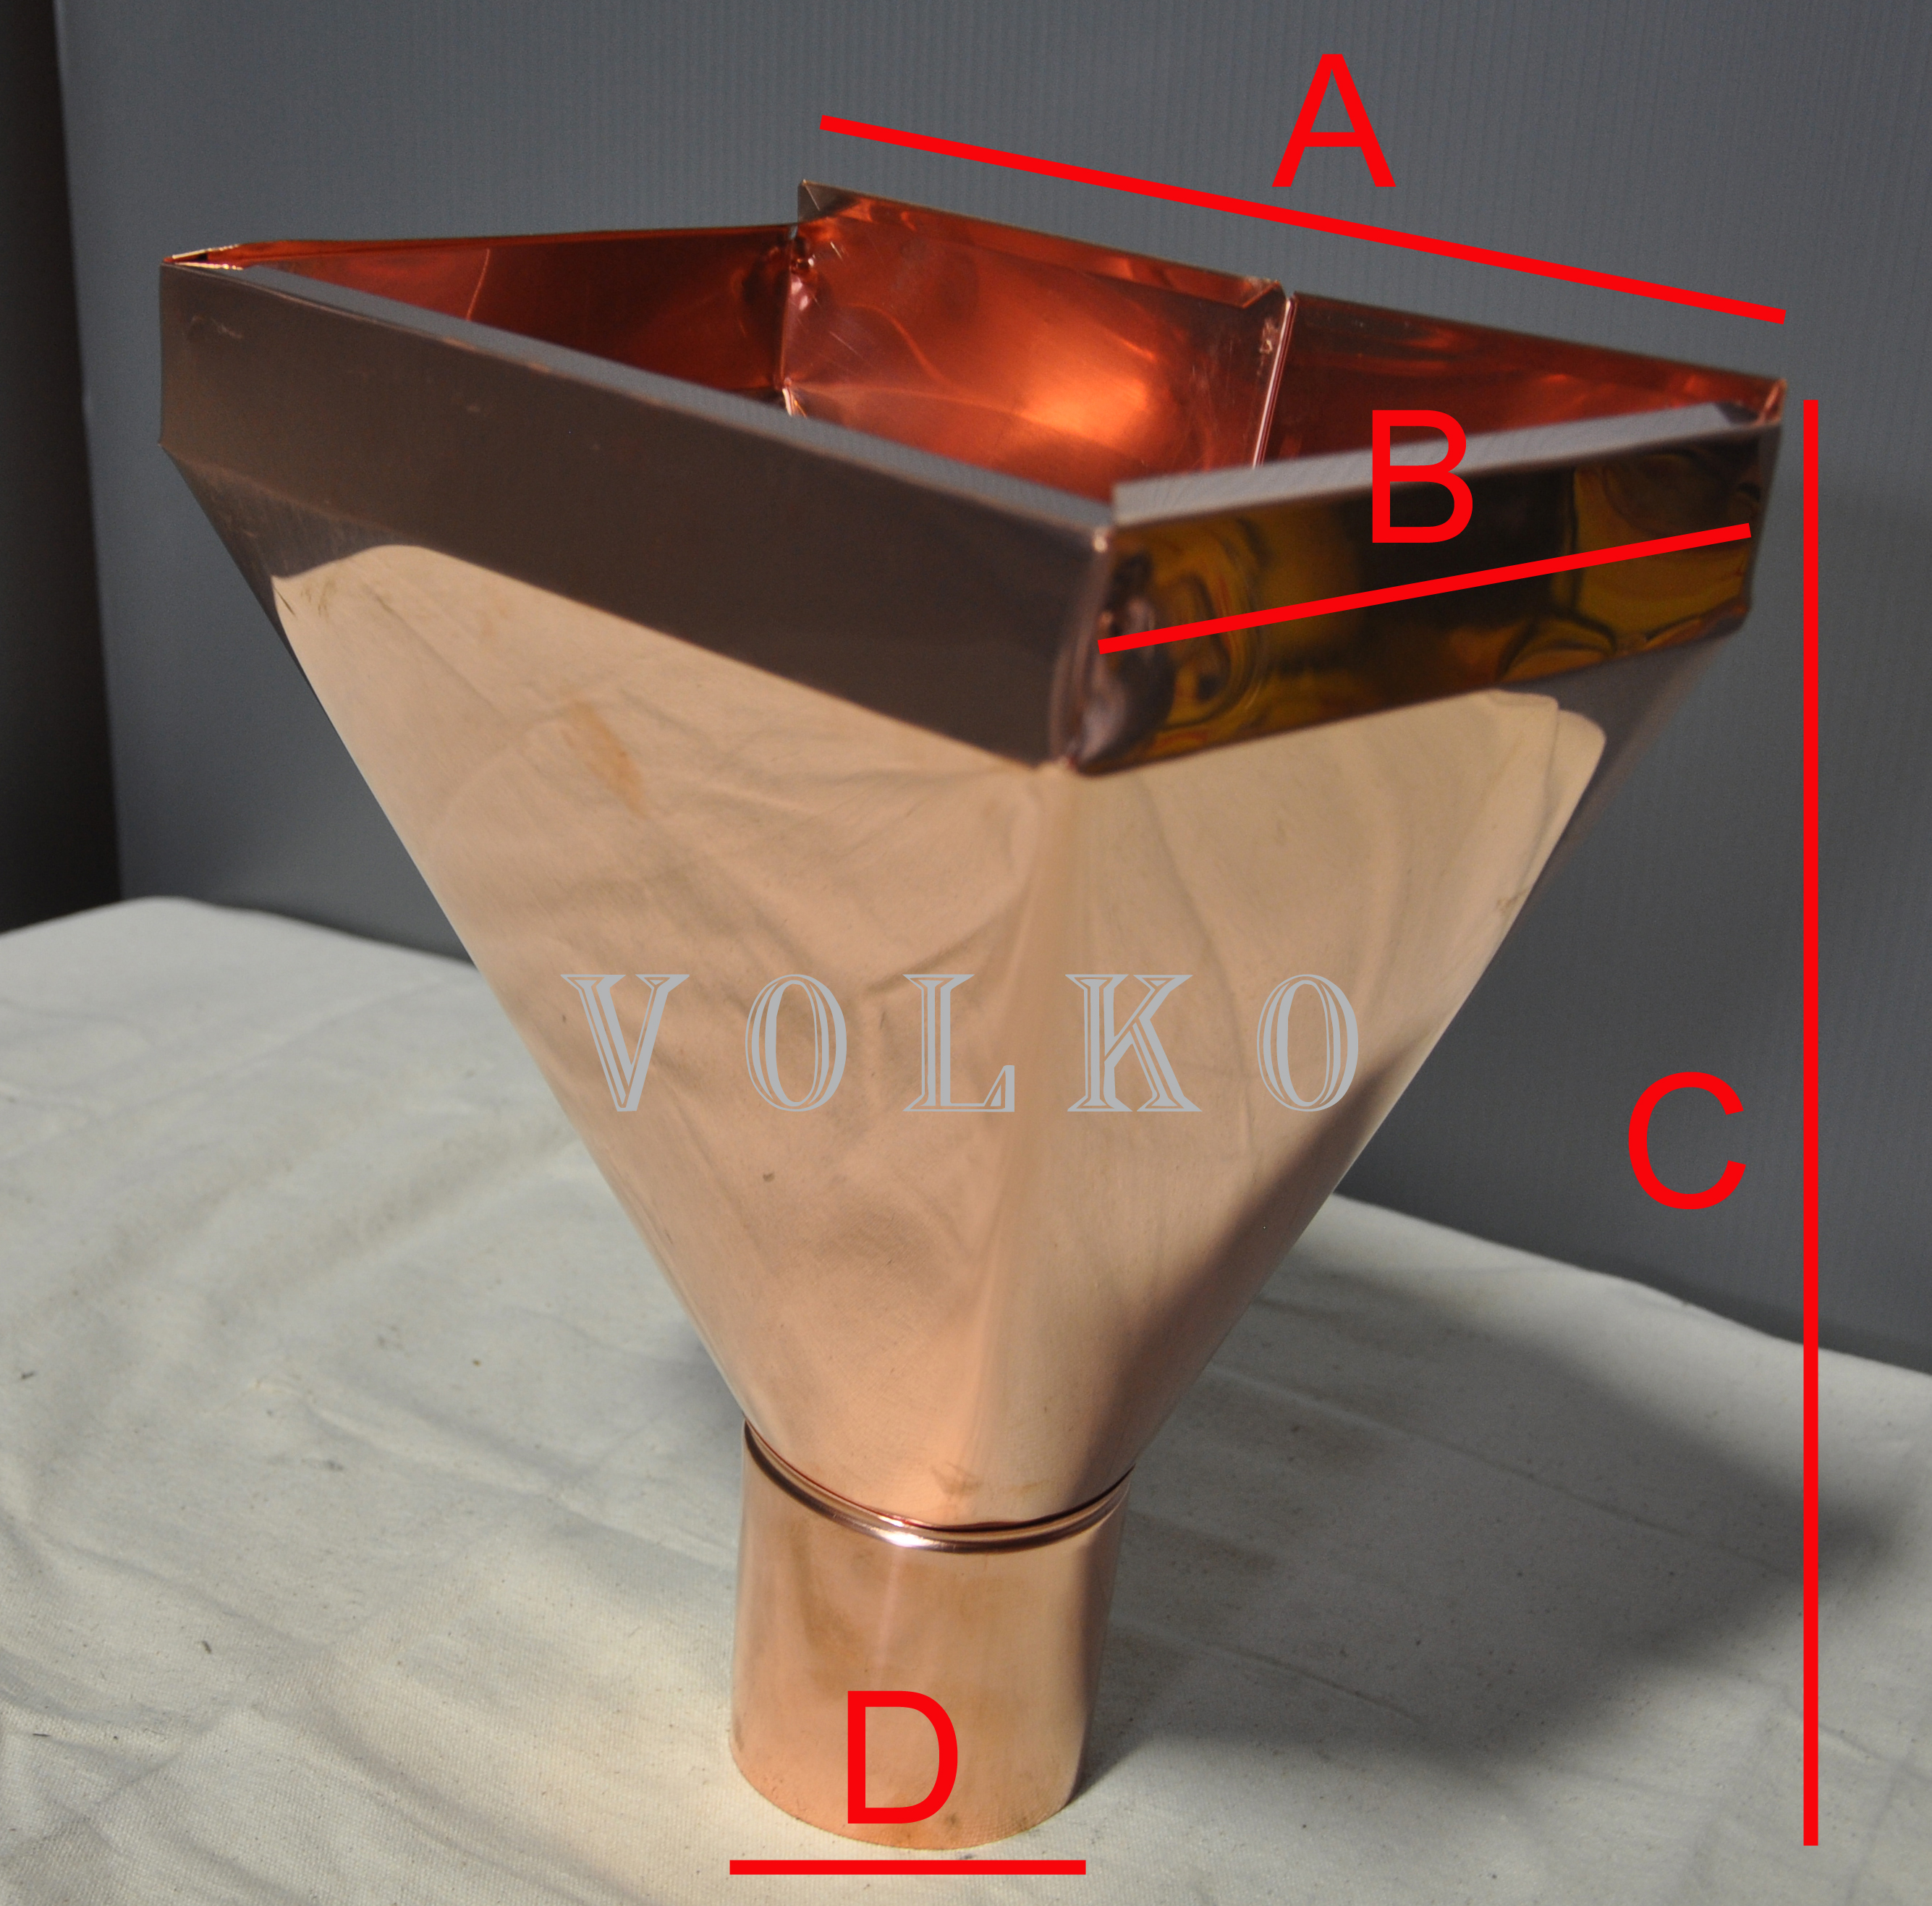 standard commercial copper leader head measurements